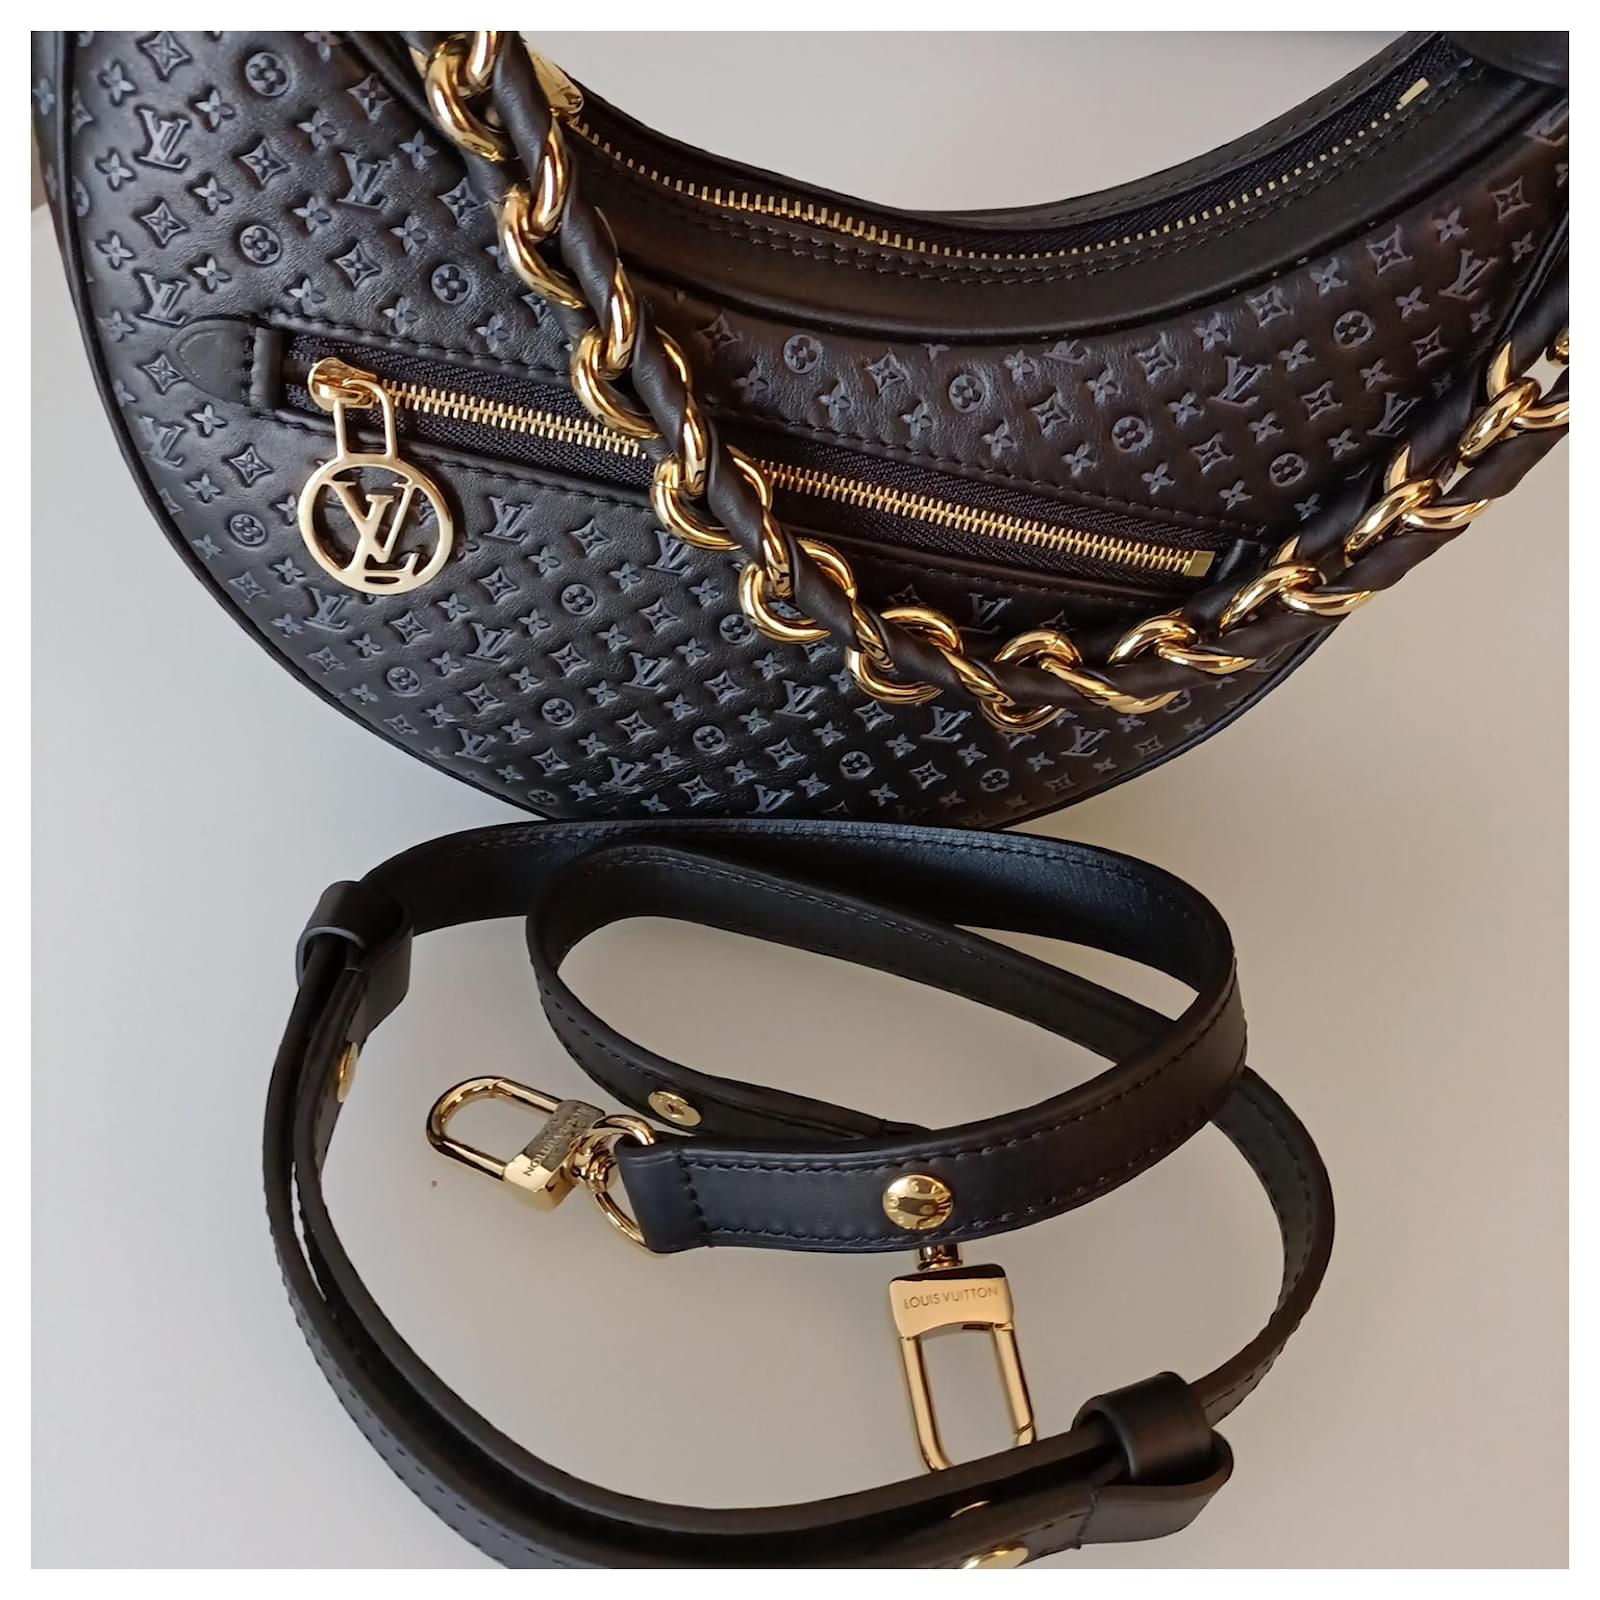 LV Loop handbag black